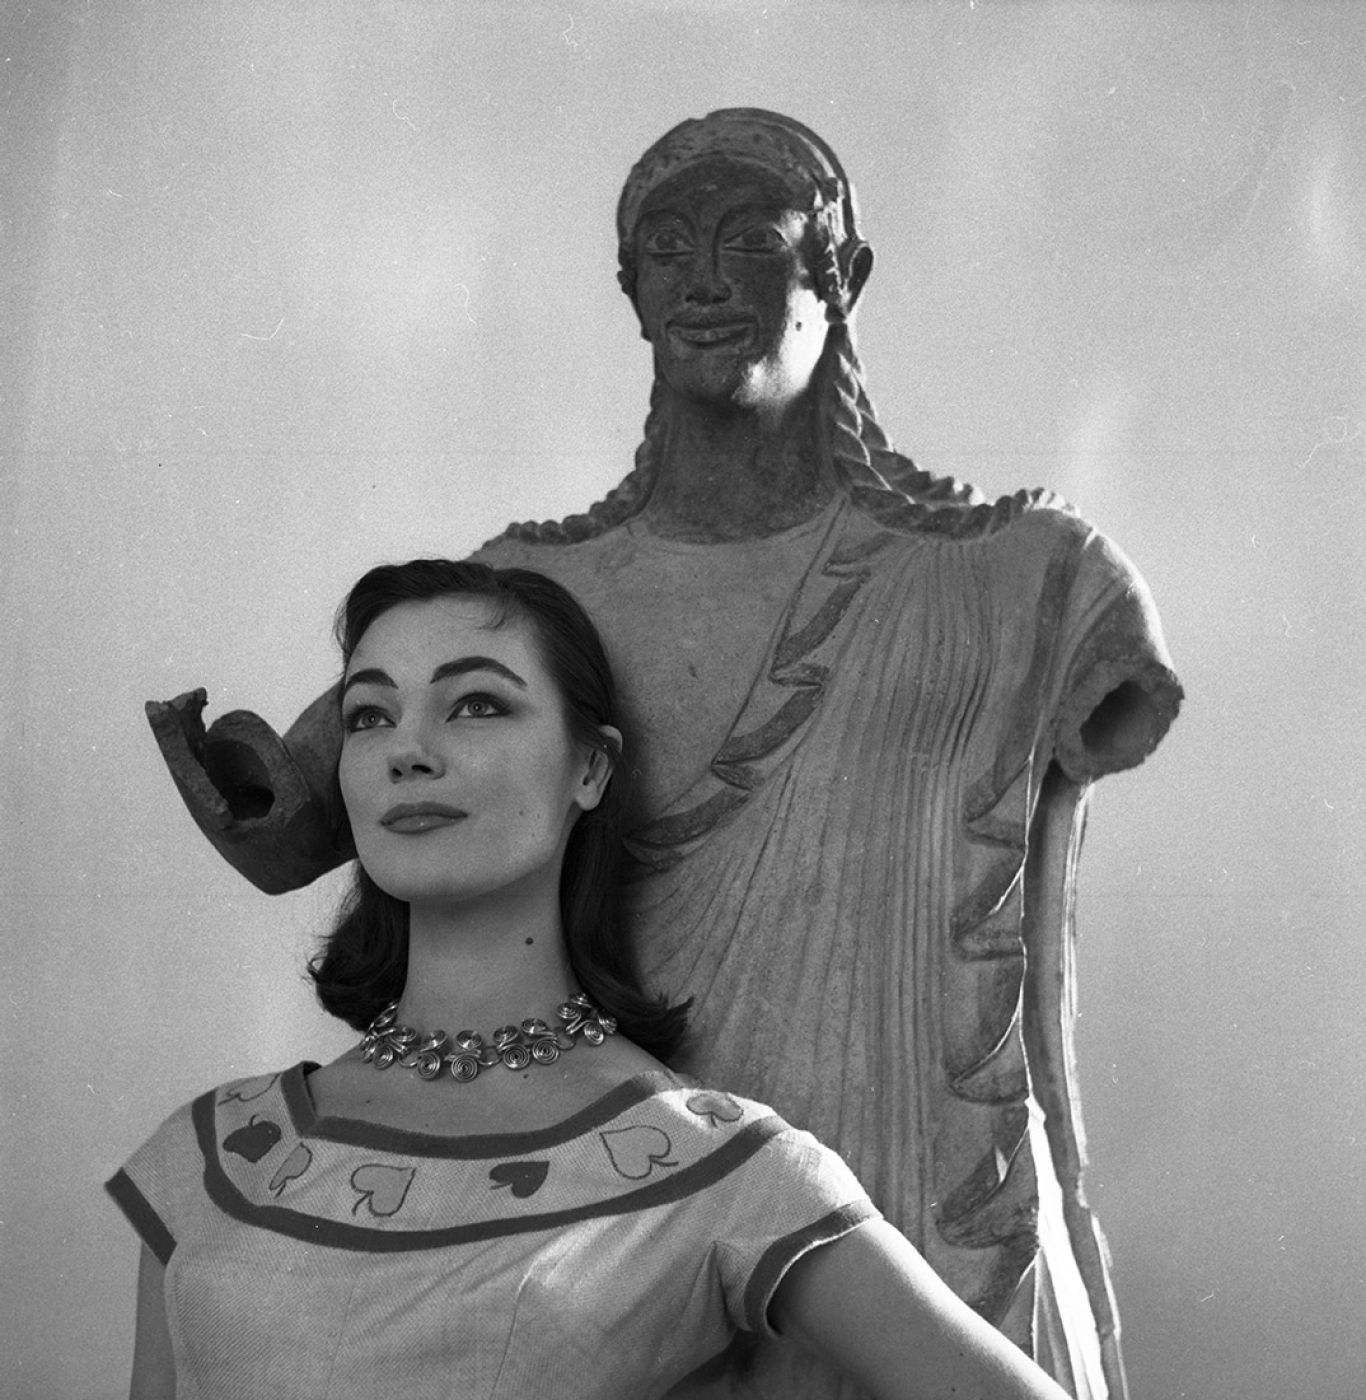 Pasquale De Antonis, “Ivy Nicholson al Museo Etrusco”, 1956